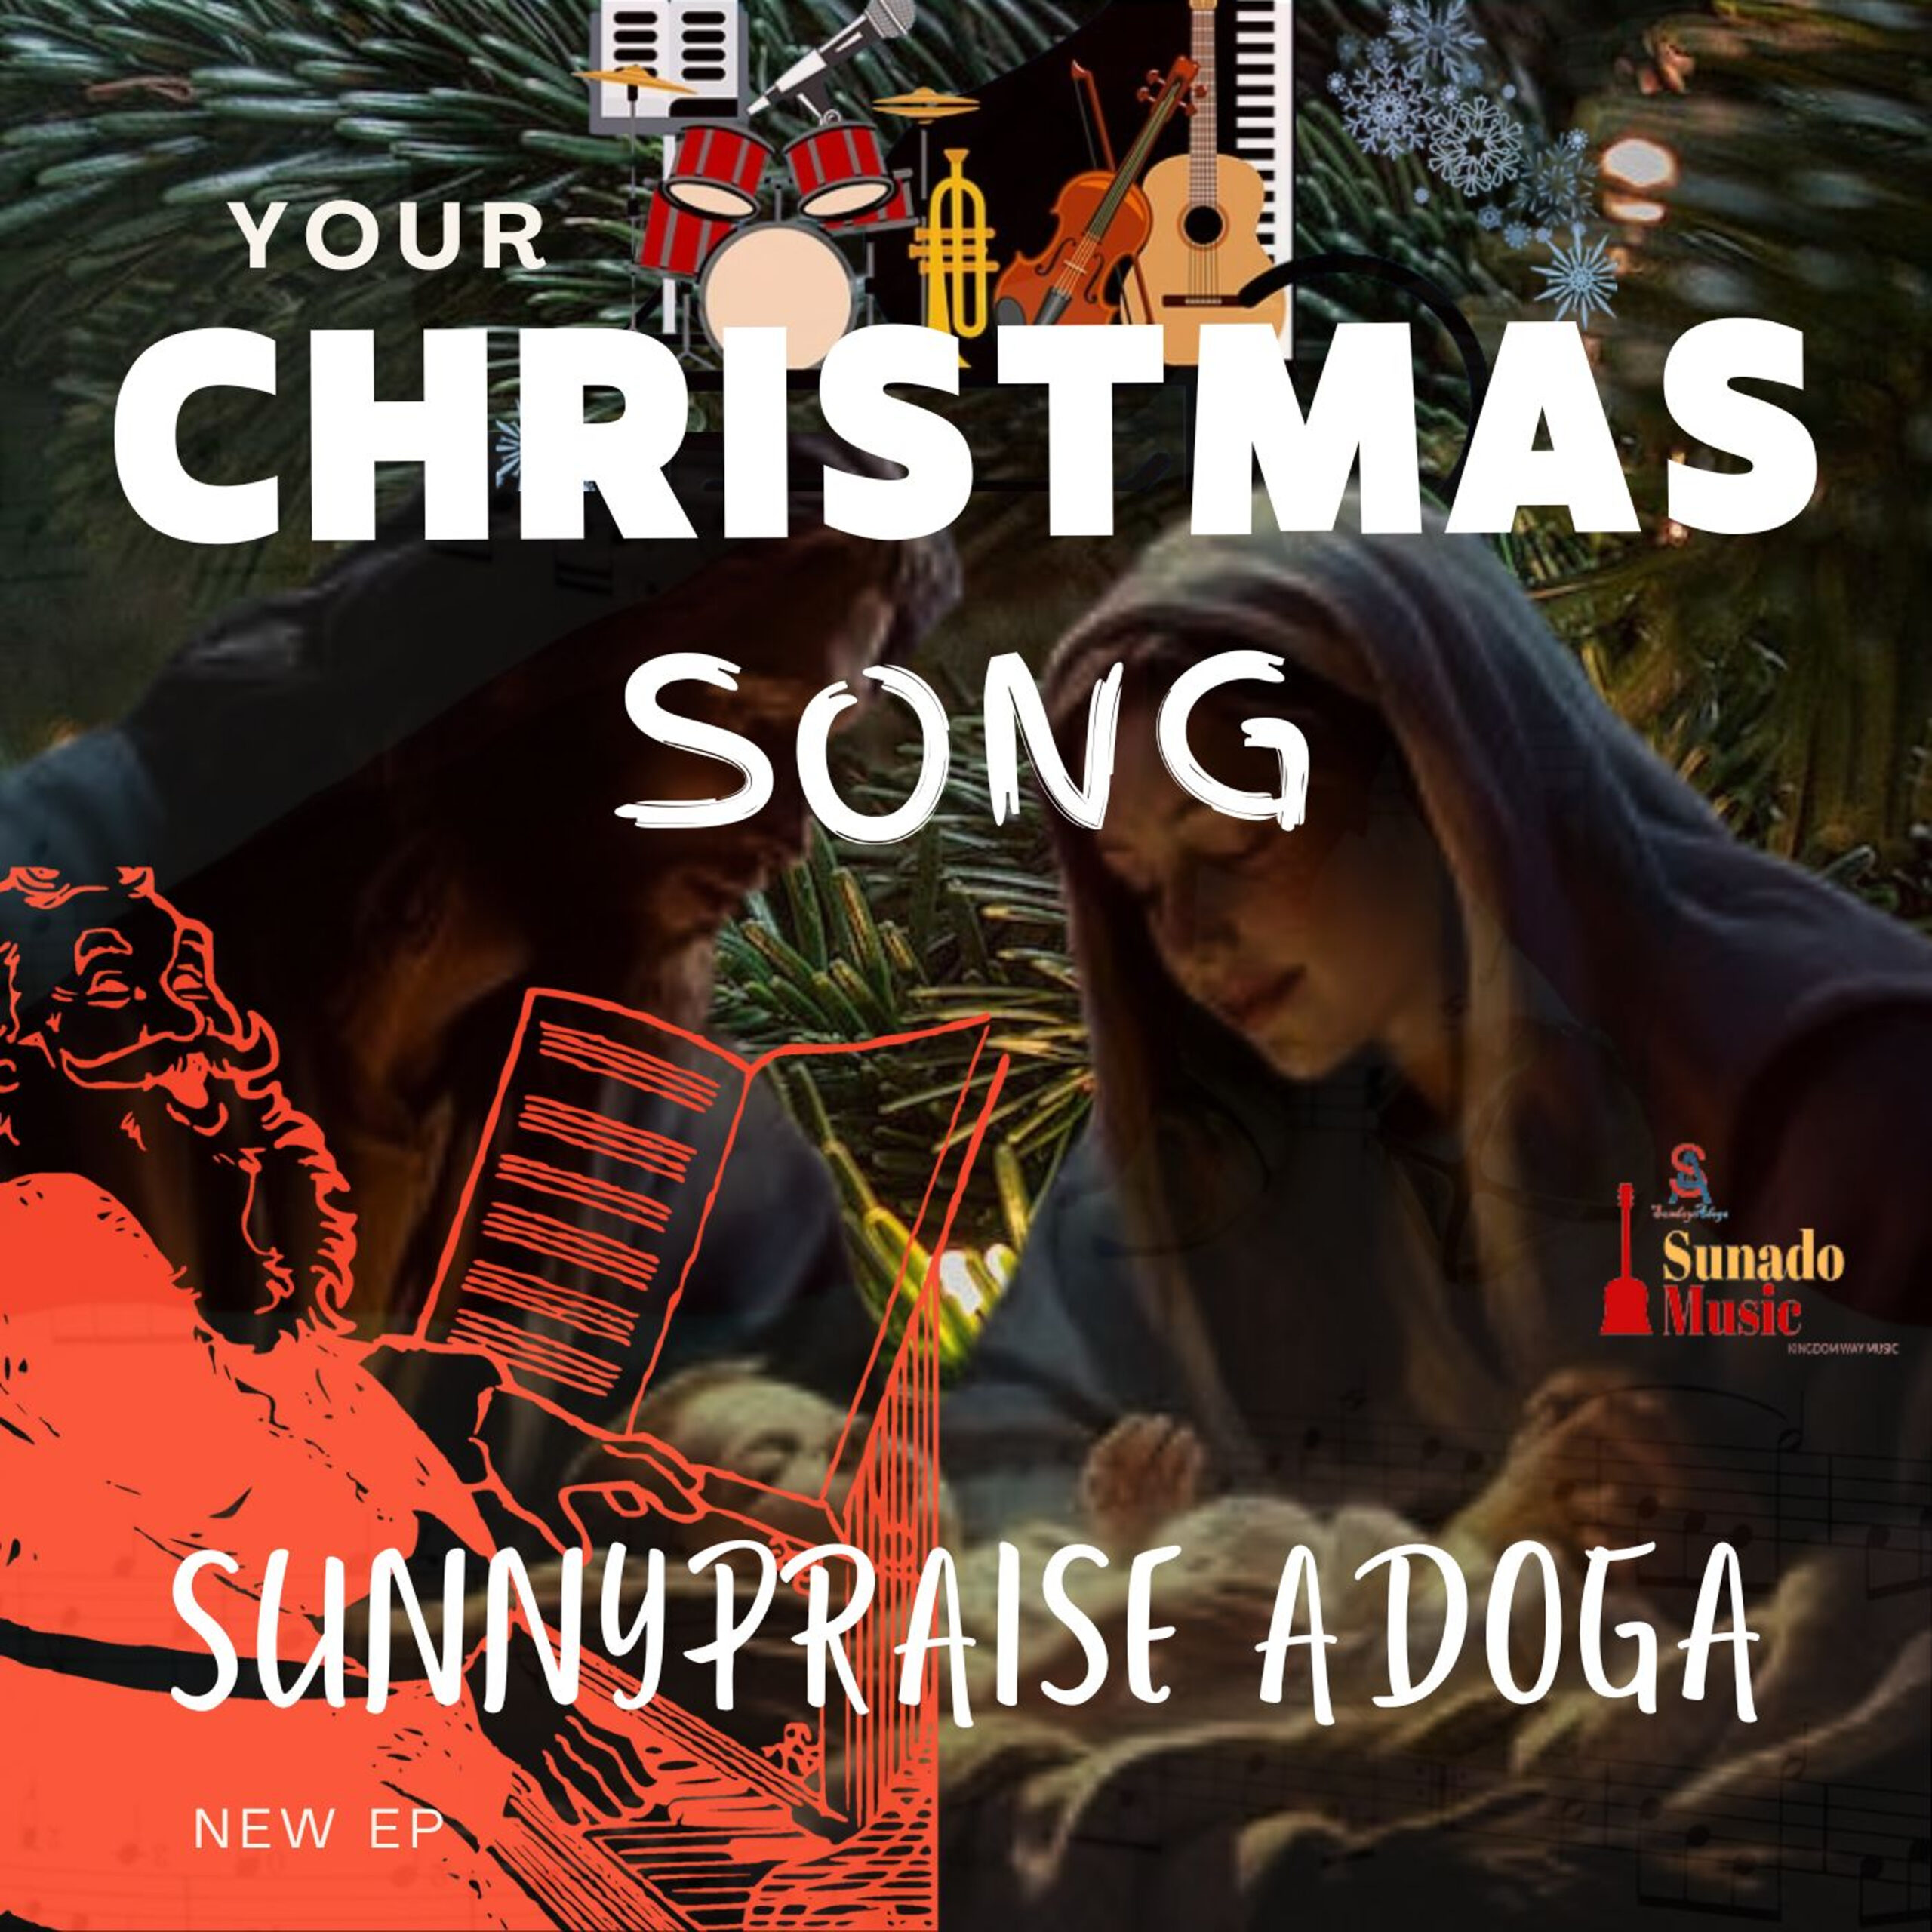 Sunnypraise Adoga - Your Christmas Song